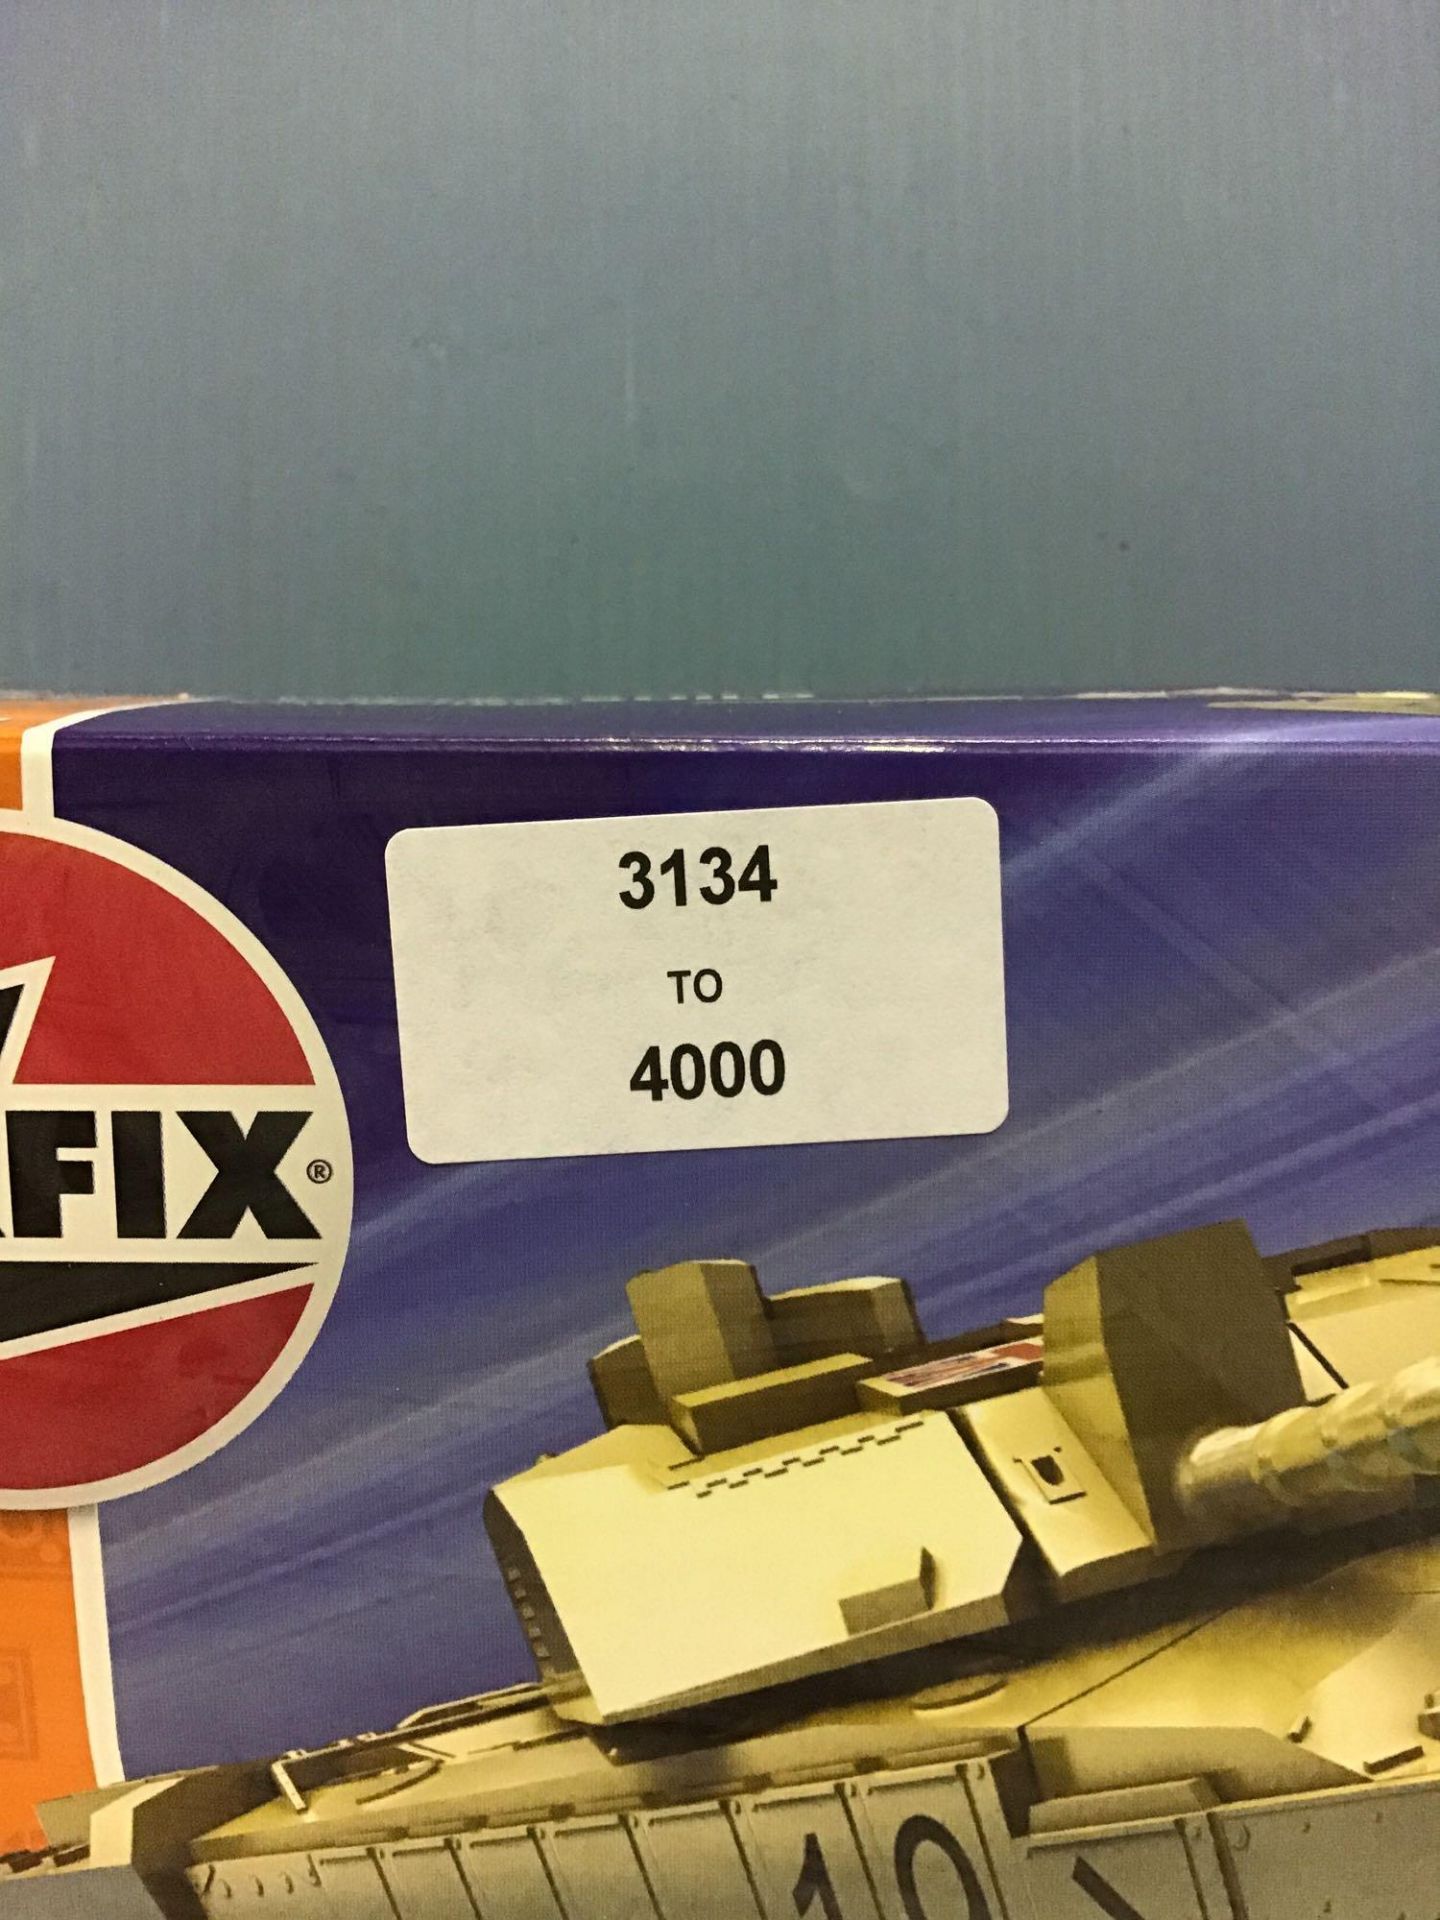 Airfix J6010 Model kit - £12.99 RRP - Image 5 of 5